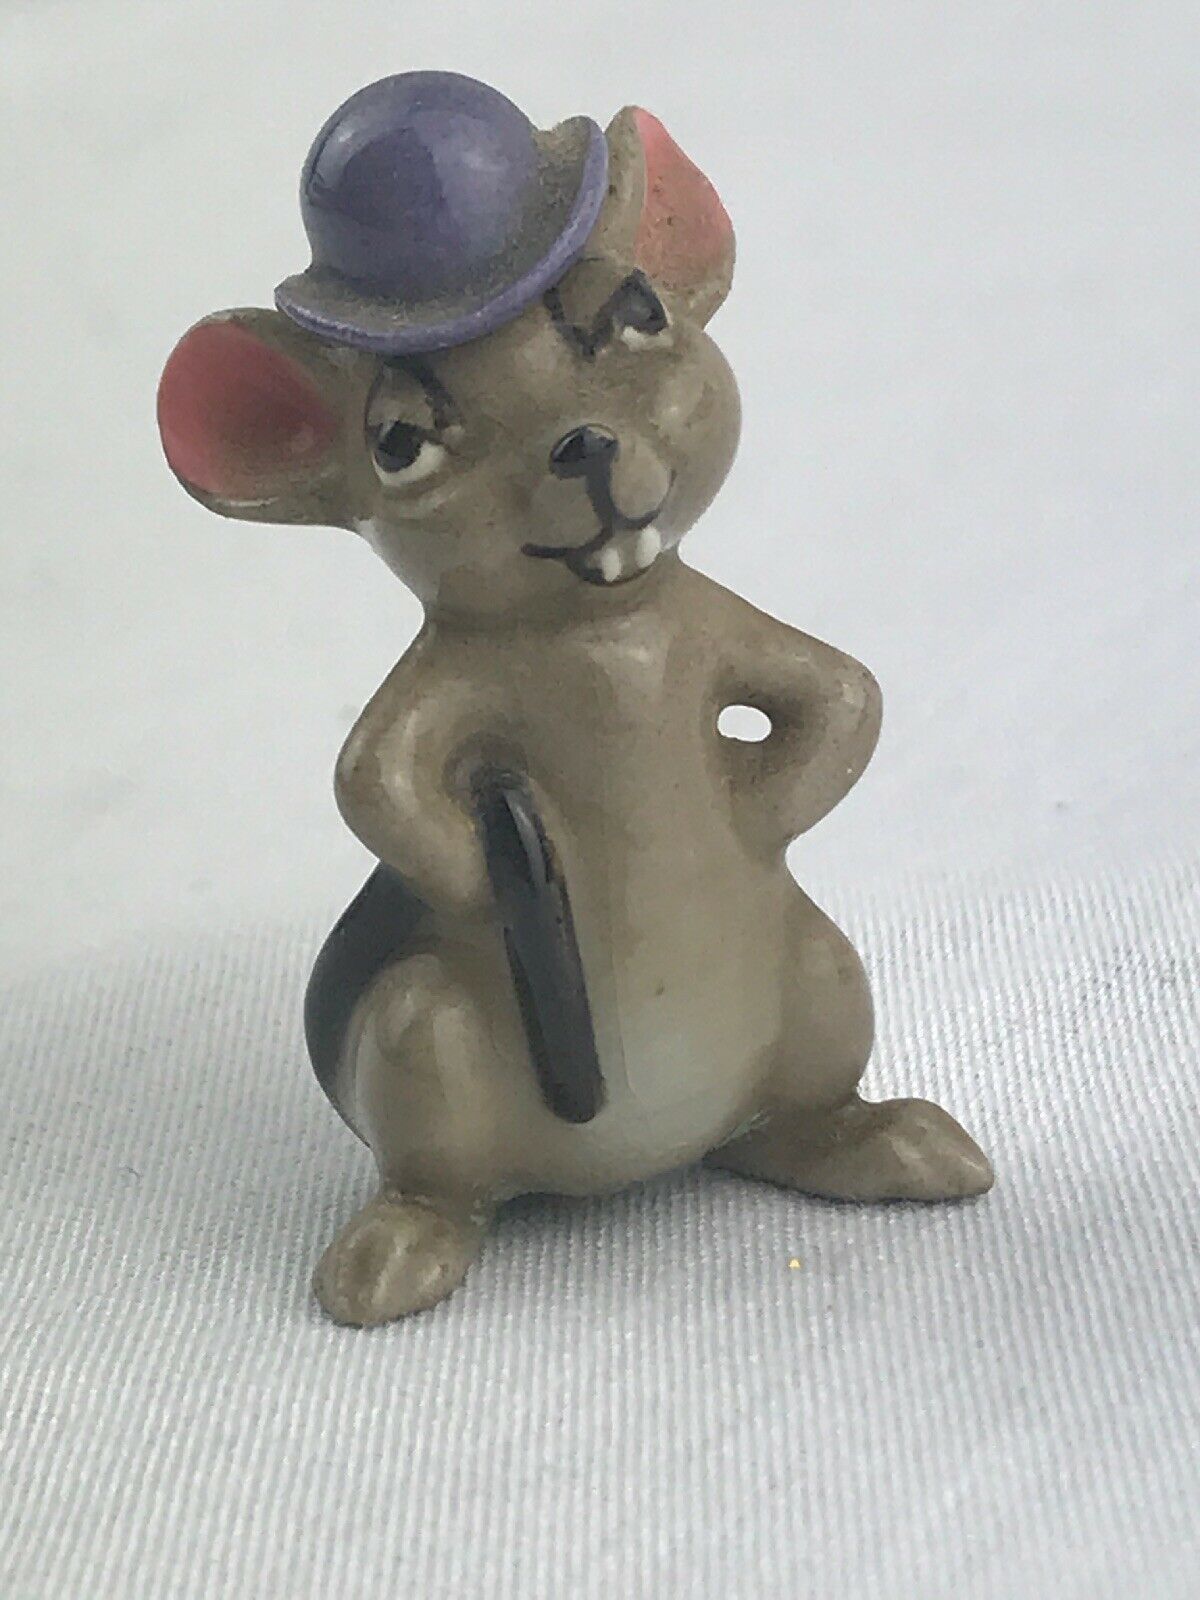 Miniature Ceramic Mouse In Purple Bowler Hat Figurine 1”h